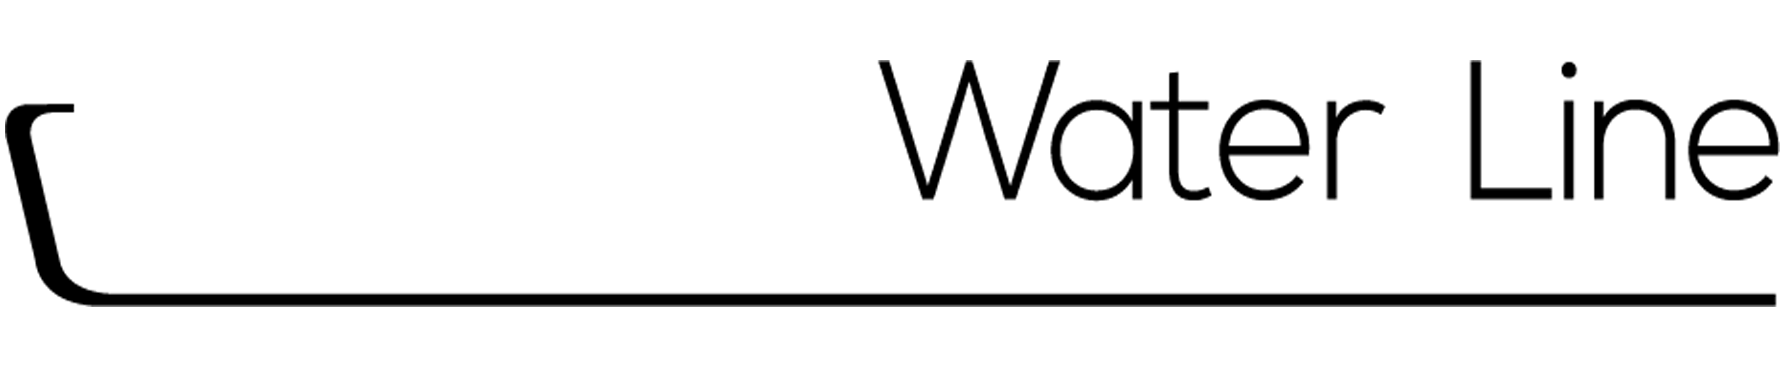 Logotipo Dosatron WaterLine